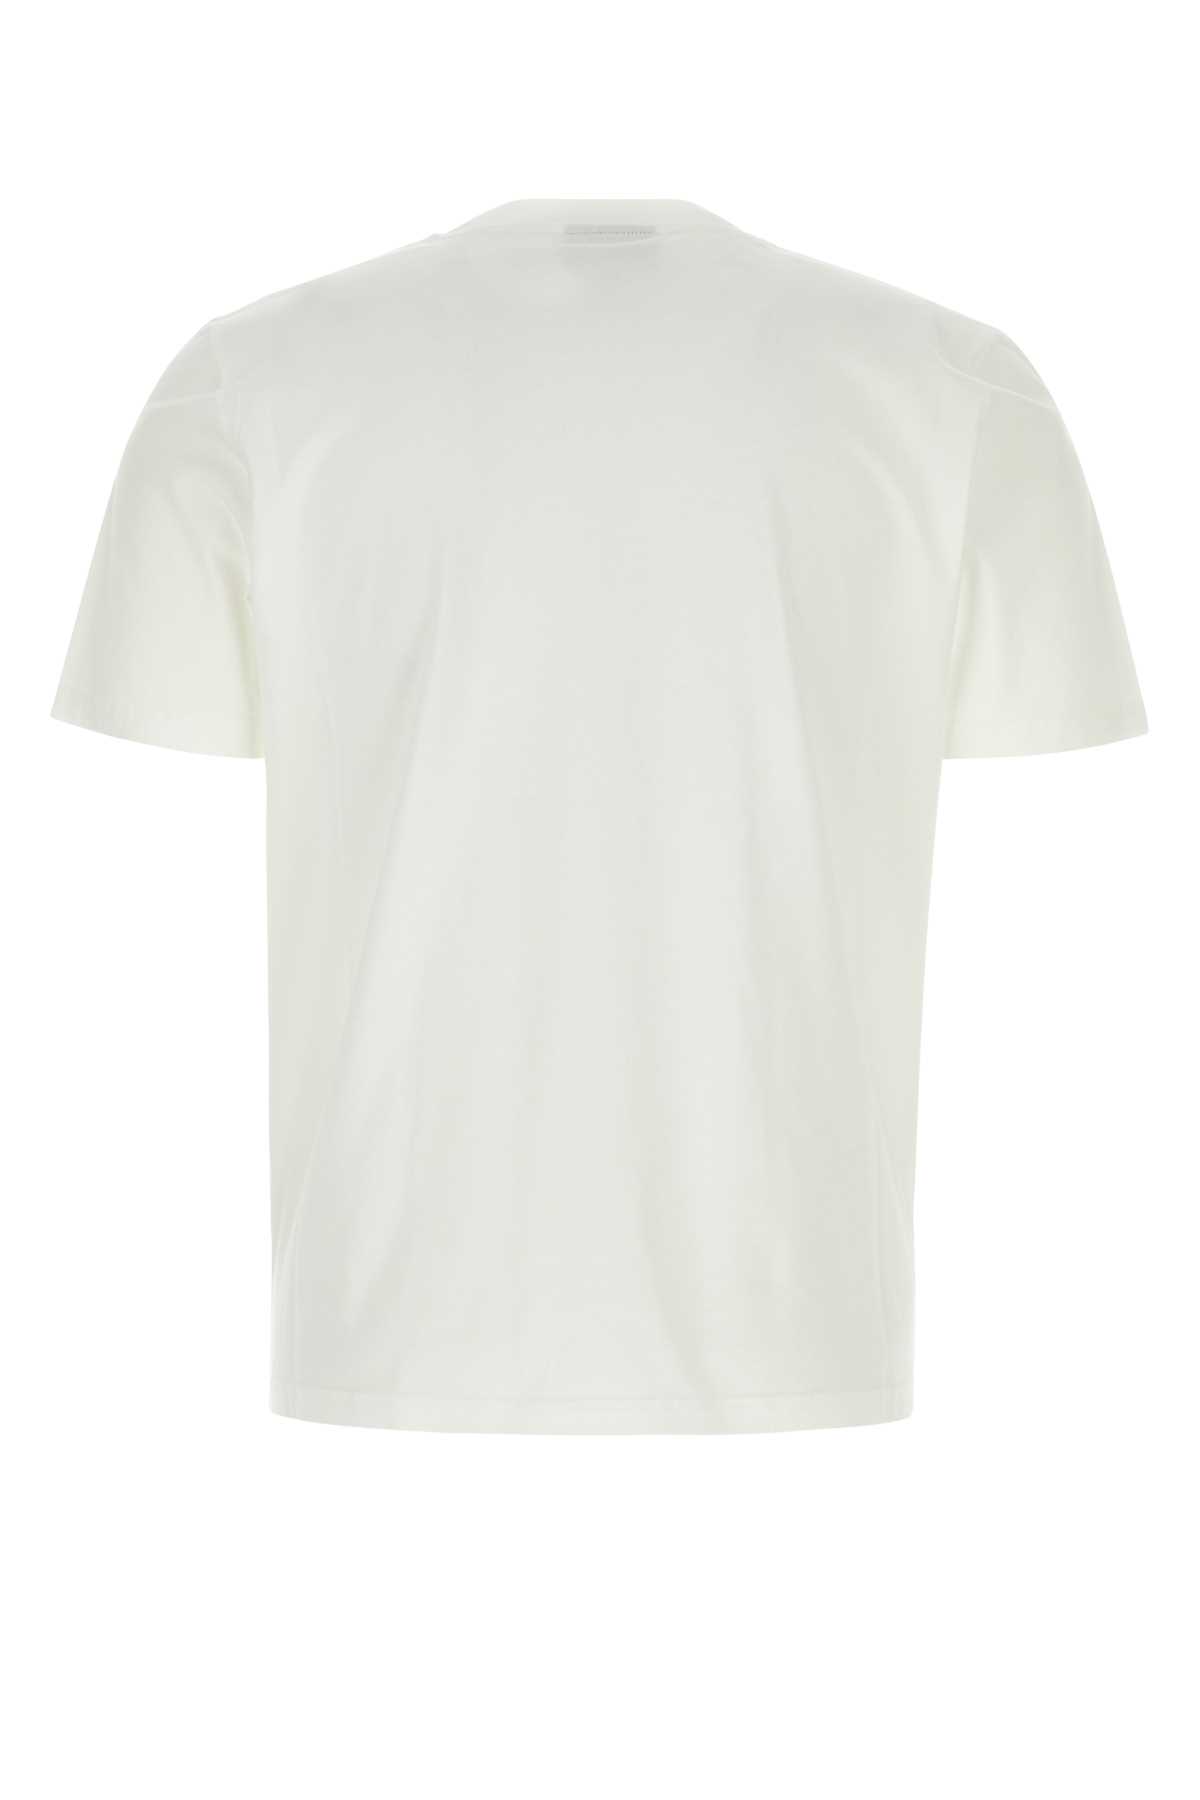 Botter White Cotton T-shirt In Whitecaribnbe